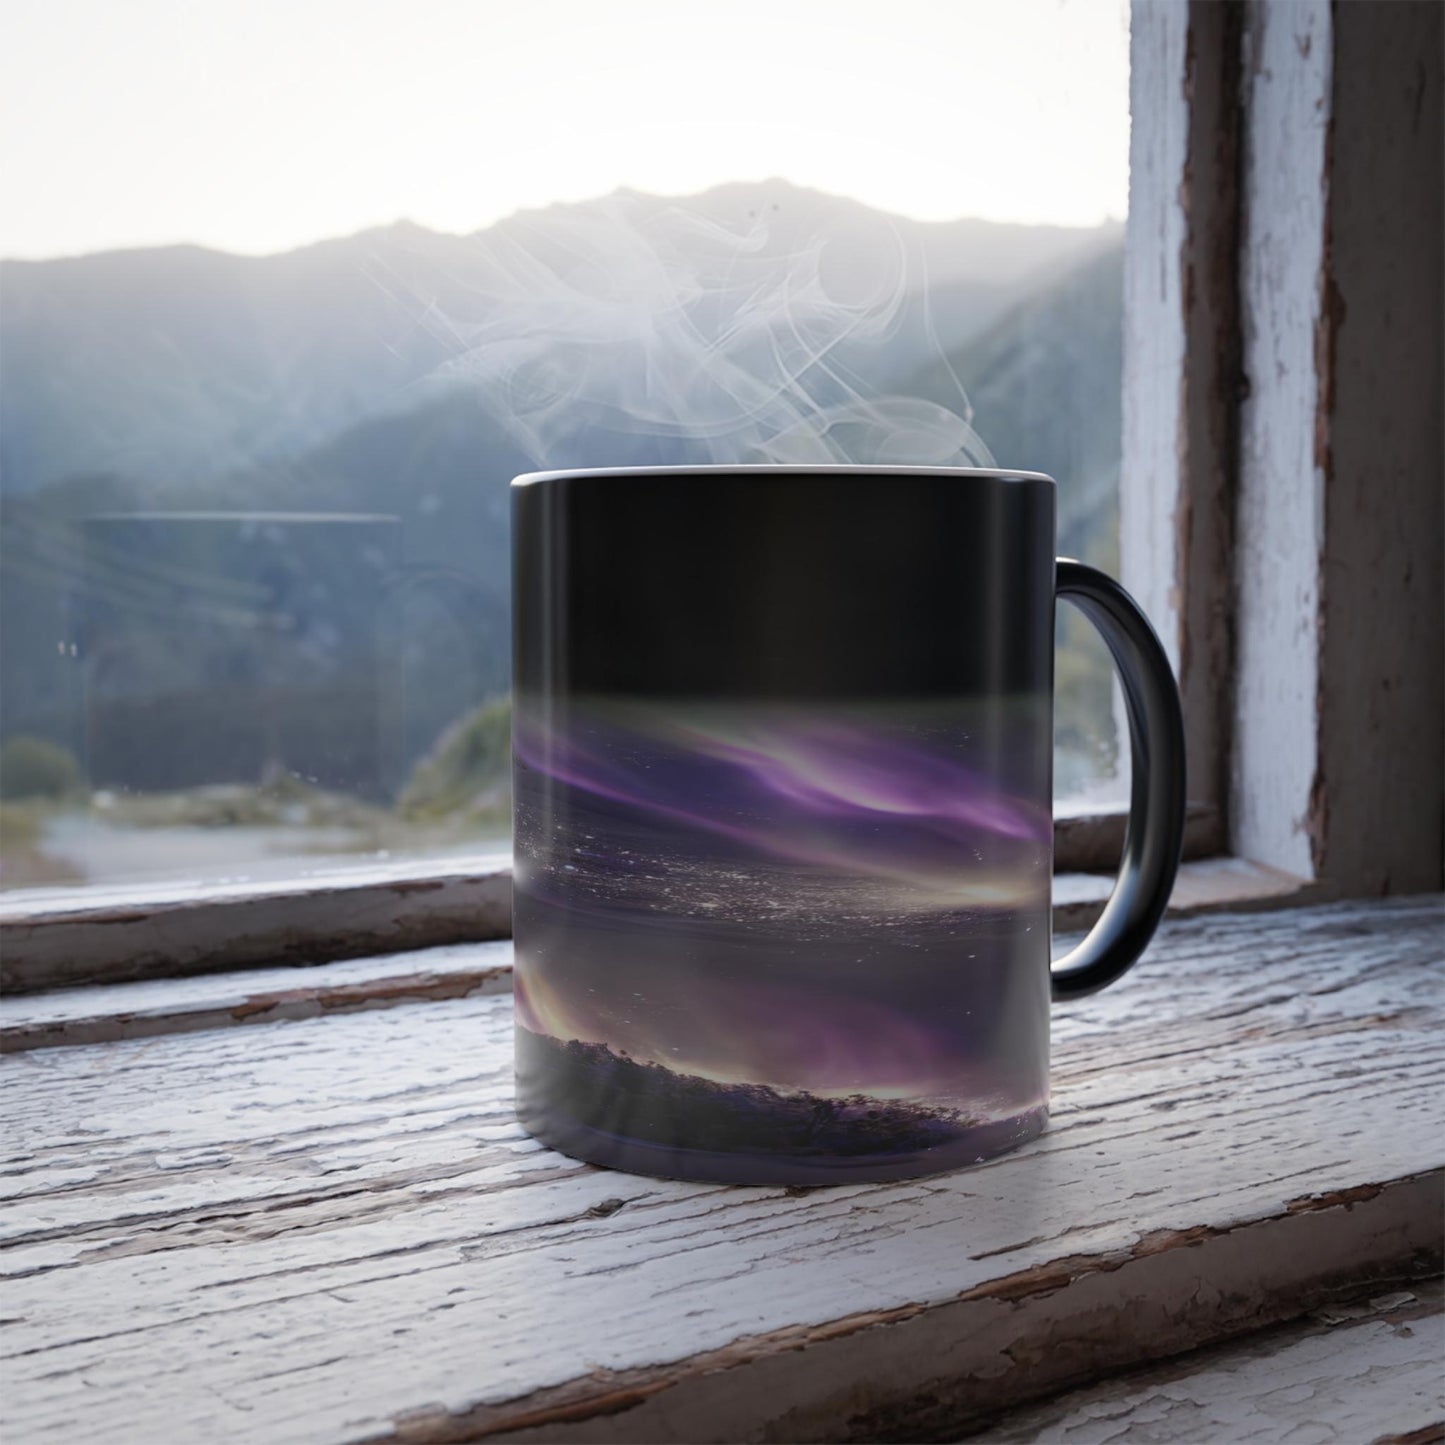 Enchanting Aurora Borealis Heat Sensitive Mug - Northern Lights Magic Color Morphing Mug 11oz - Heat Reactive Night Sky Coffee Cup - Perfect Gift for Nature Lovers 25